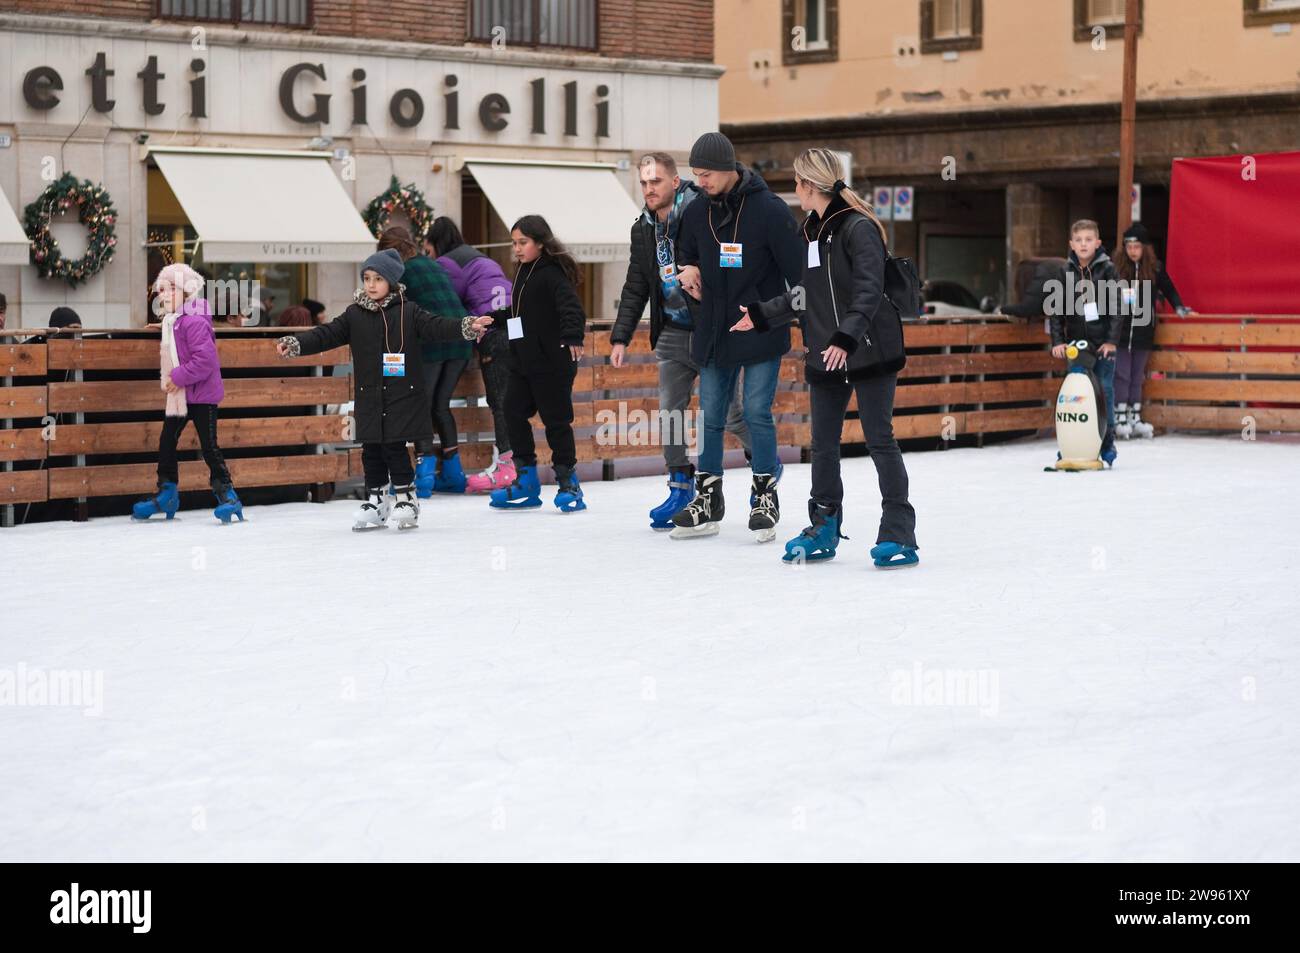 People skating on ice during Christmas holidays, shallow DOF. Stock Photo